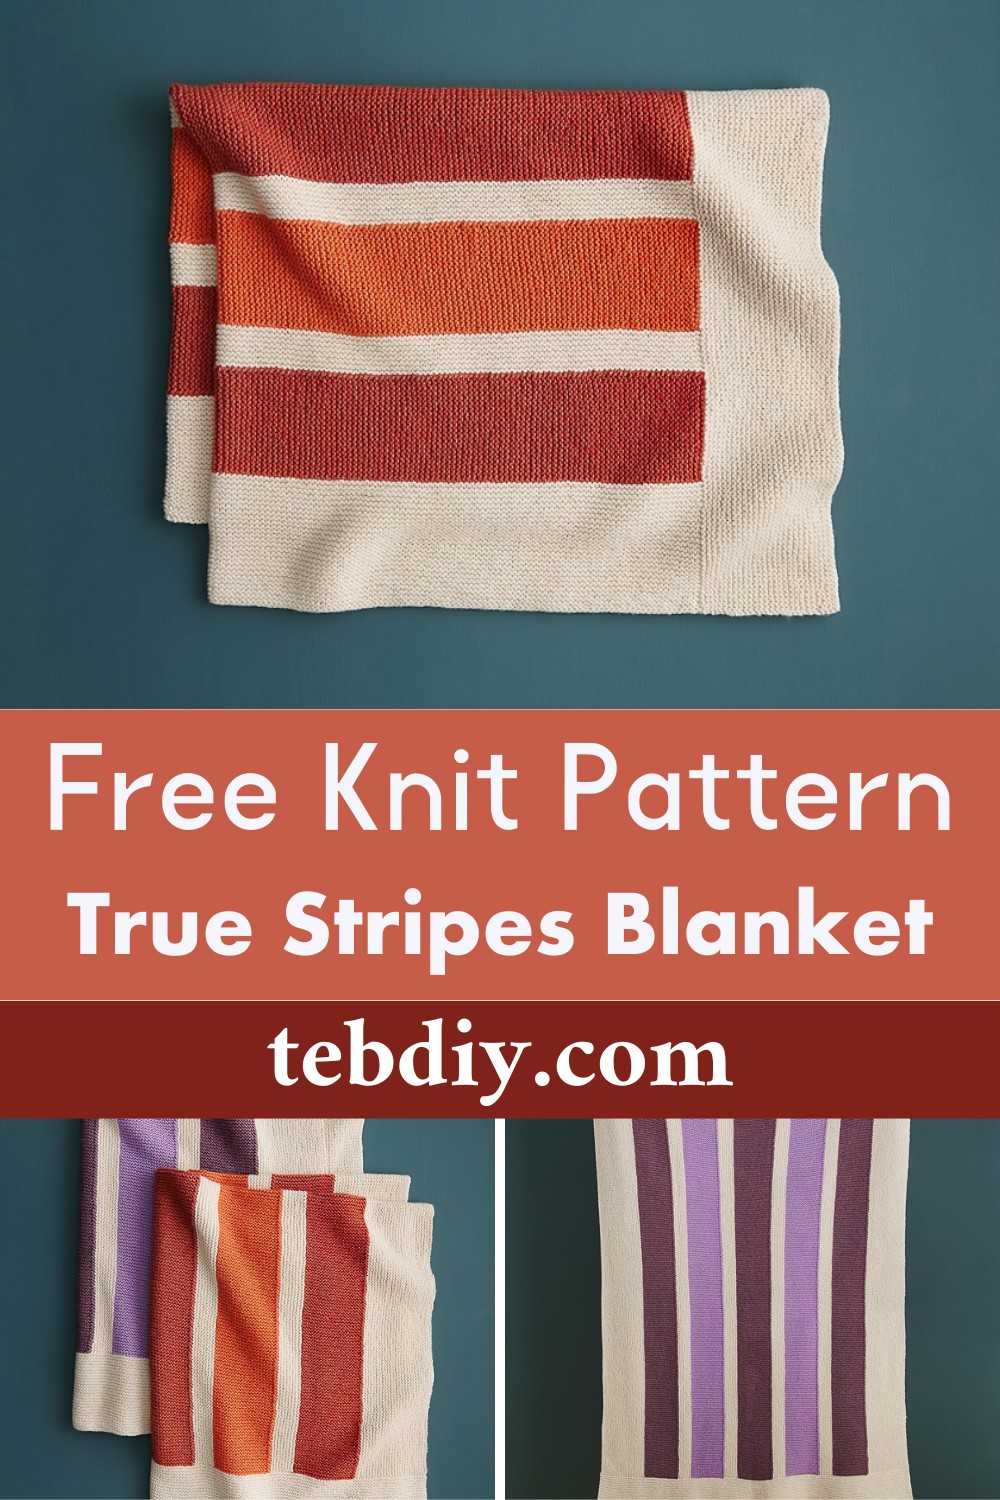 True Stripes Blanket